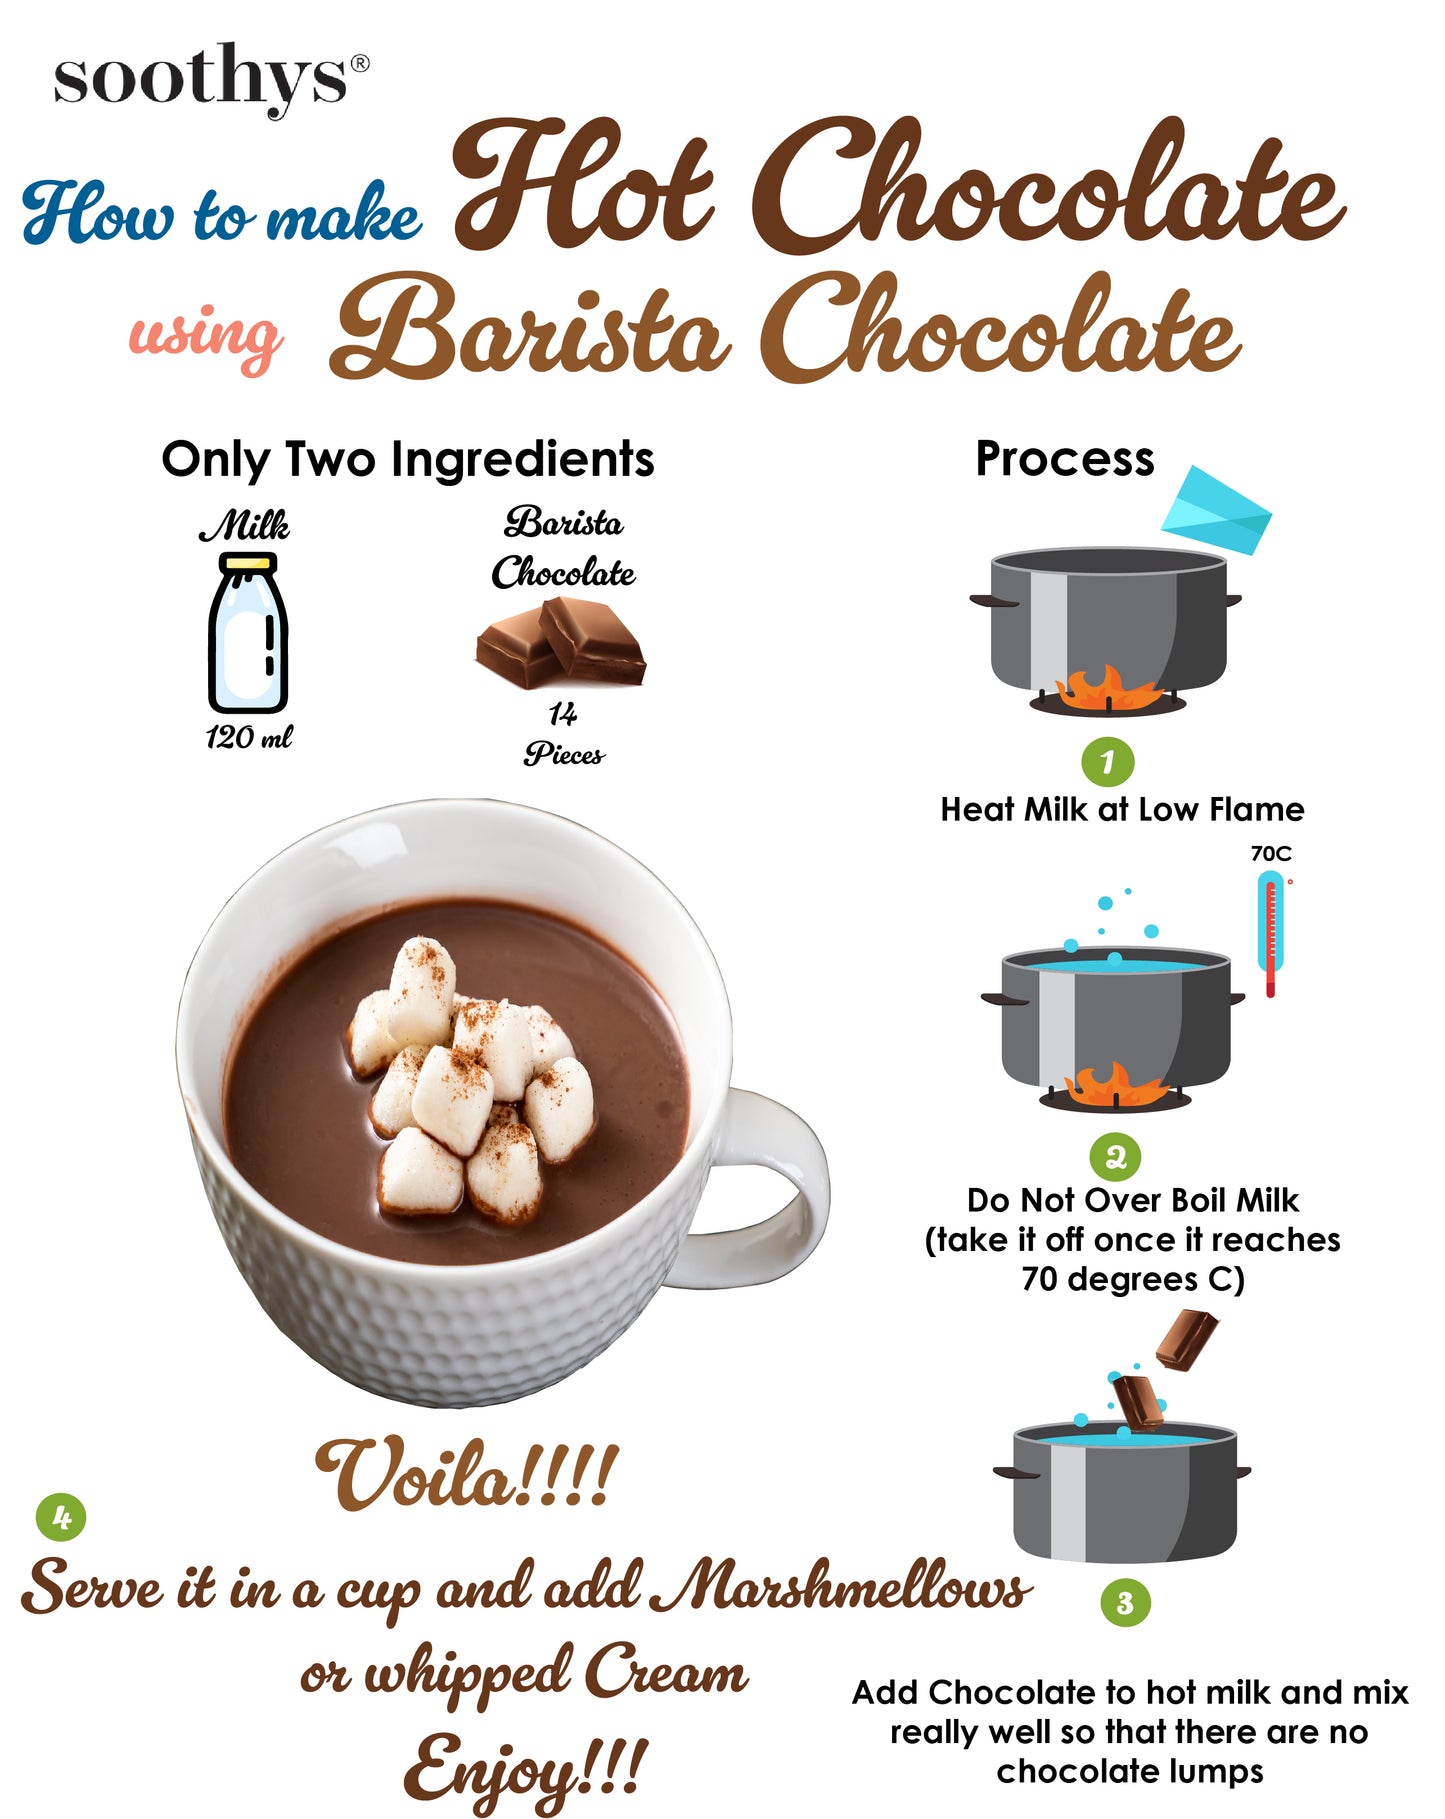 Barista Chocolate for Hot Chocolate, Mocha and Baking